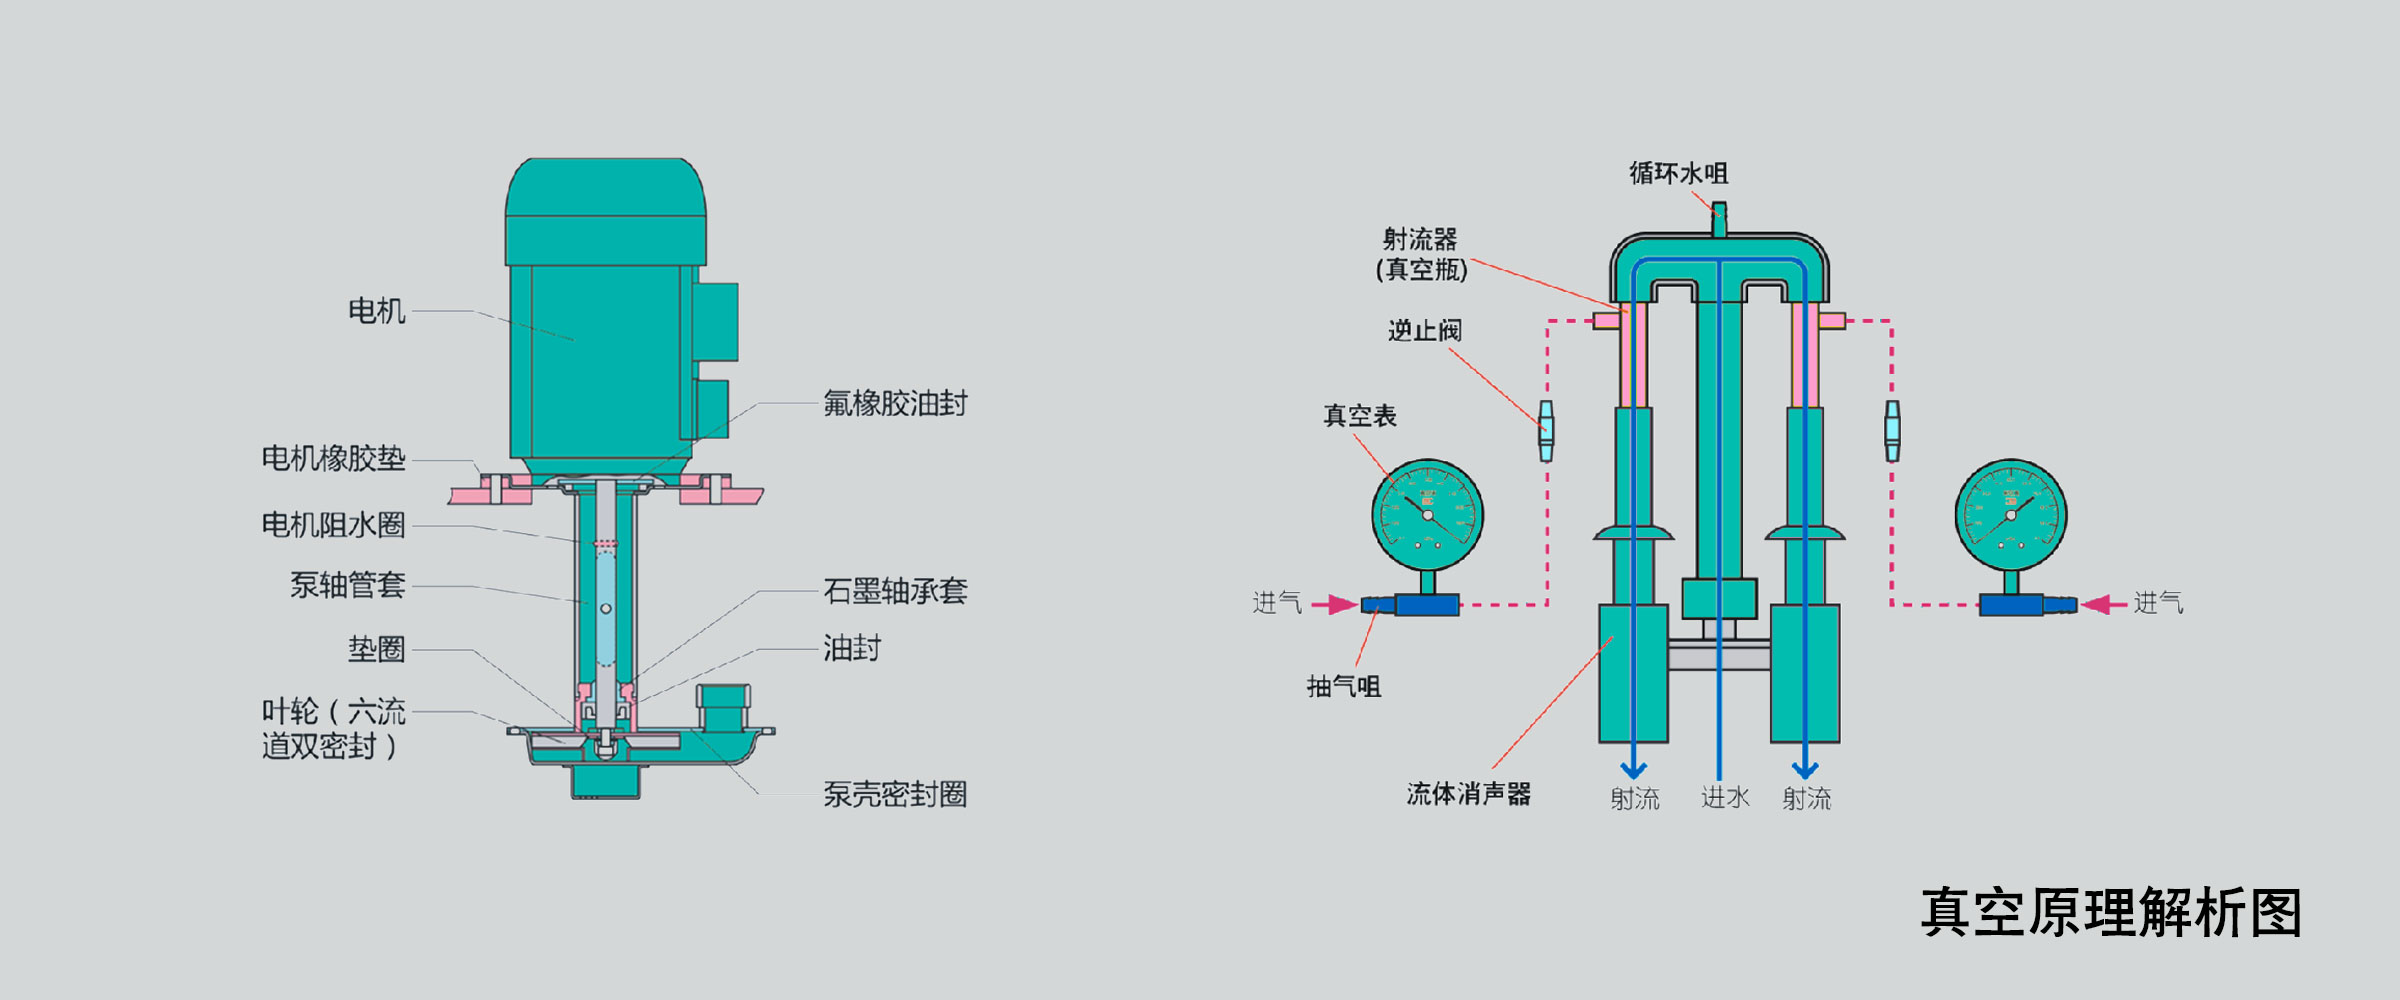 SHB-III型泵详图4.jpg